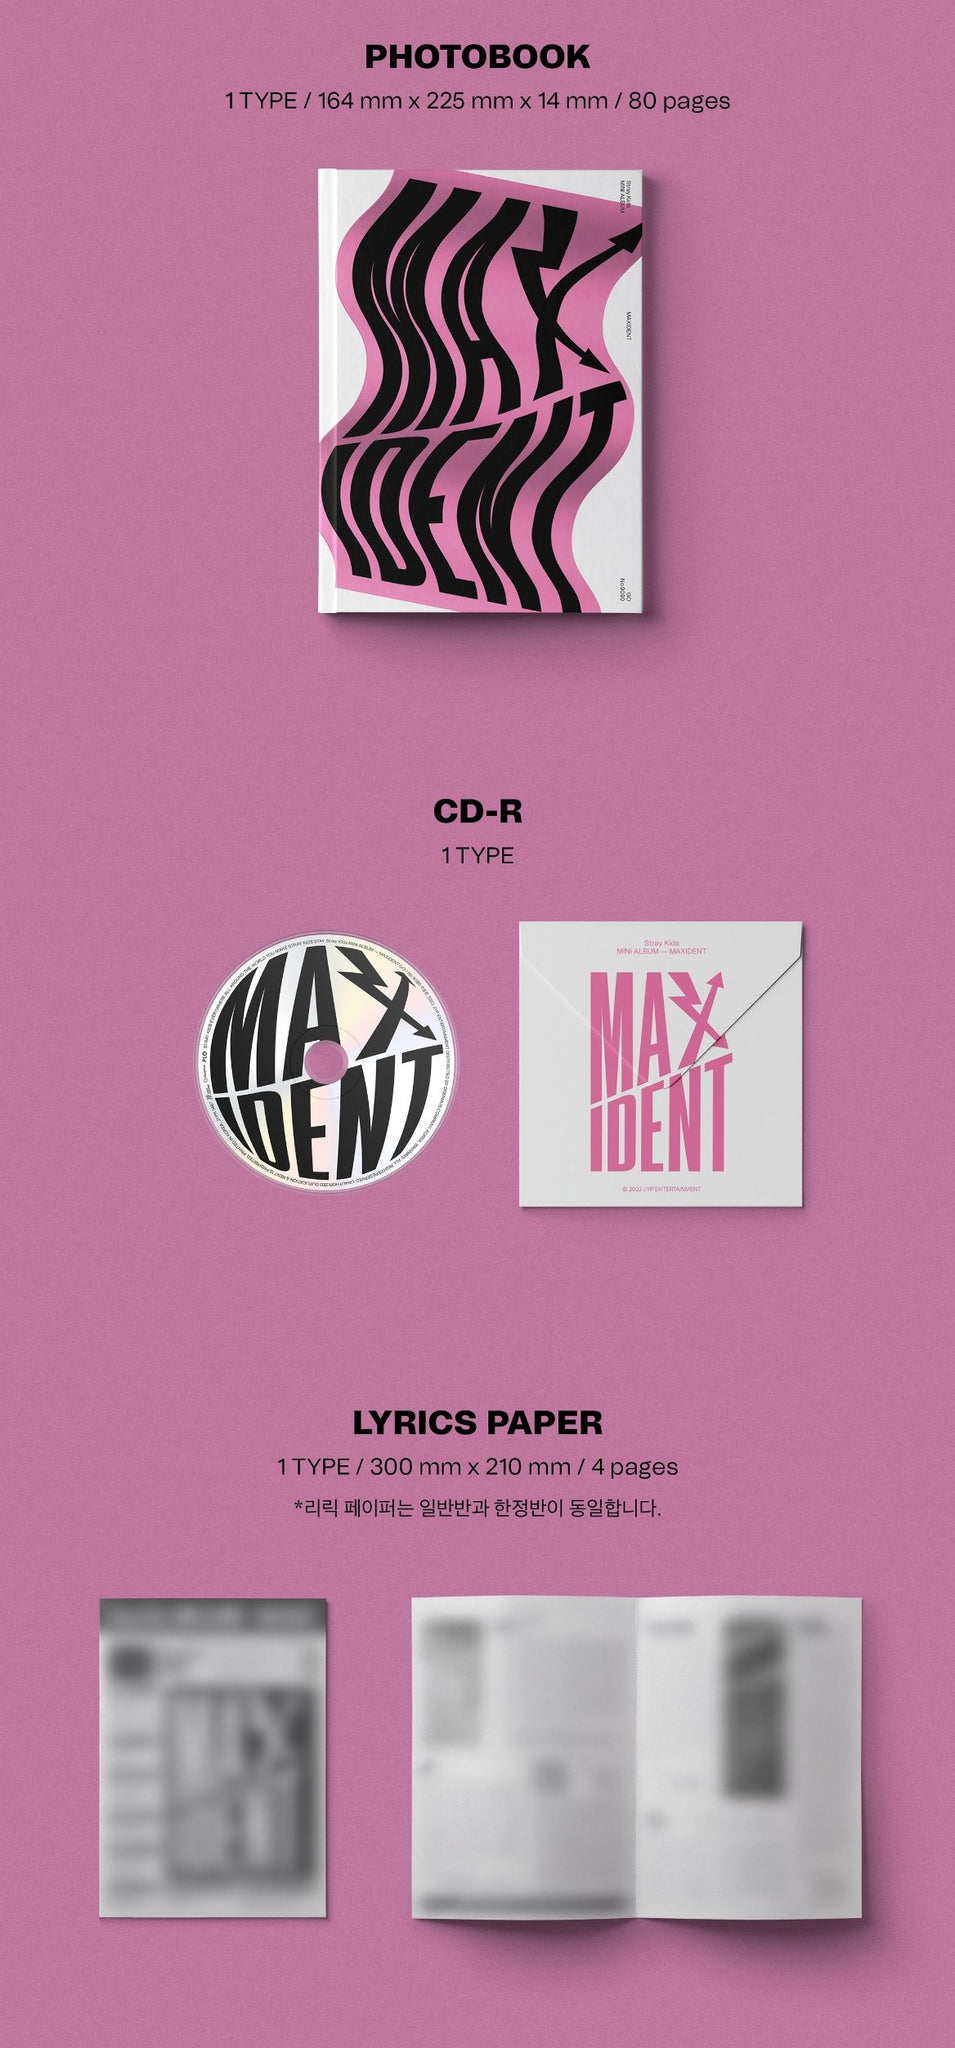 Stray Kids MAXIDENT Limited Edition Inclusions Photobook CD Lyrics Paper